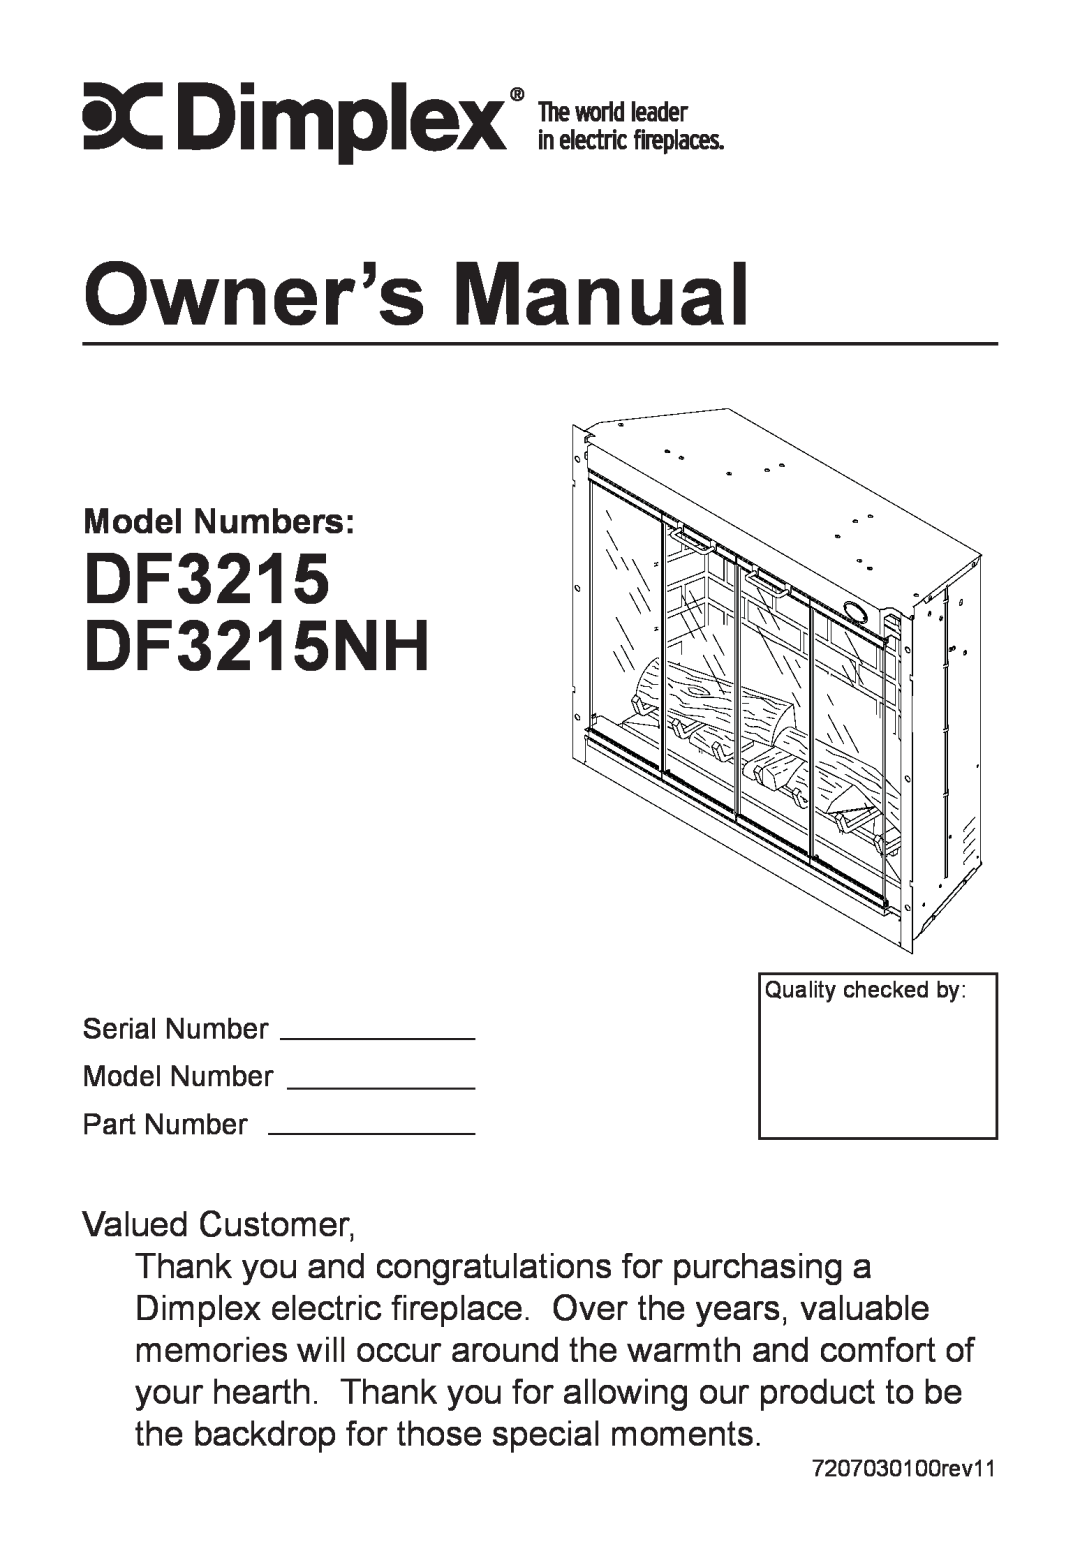 Dimplex owner manual DF3215 DF3215NH, Model Numbers, Valued Customer 